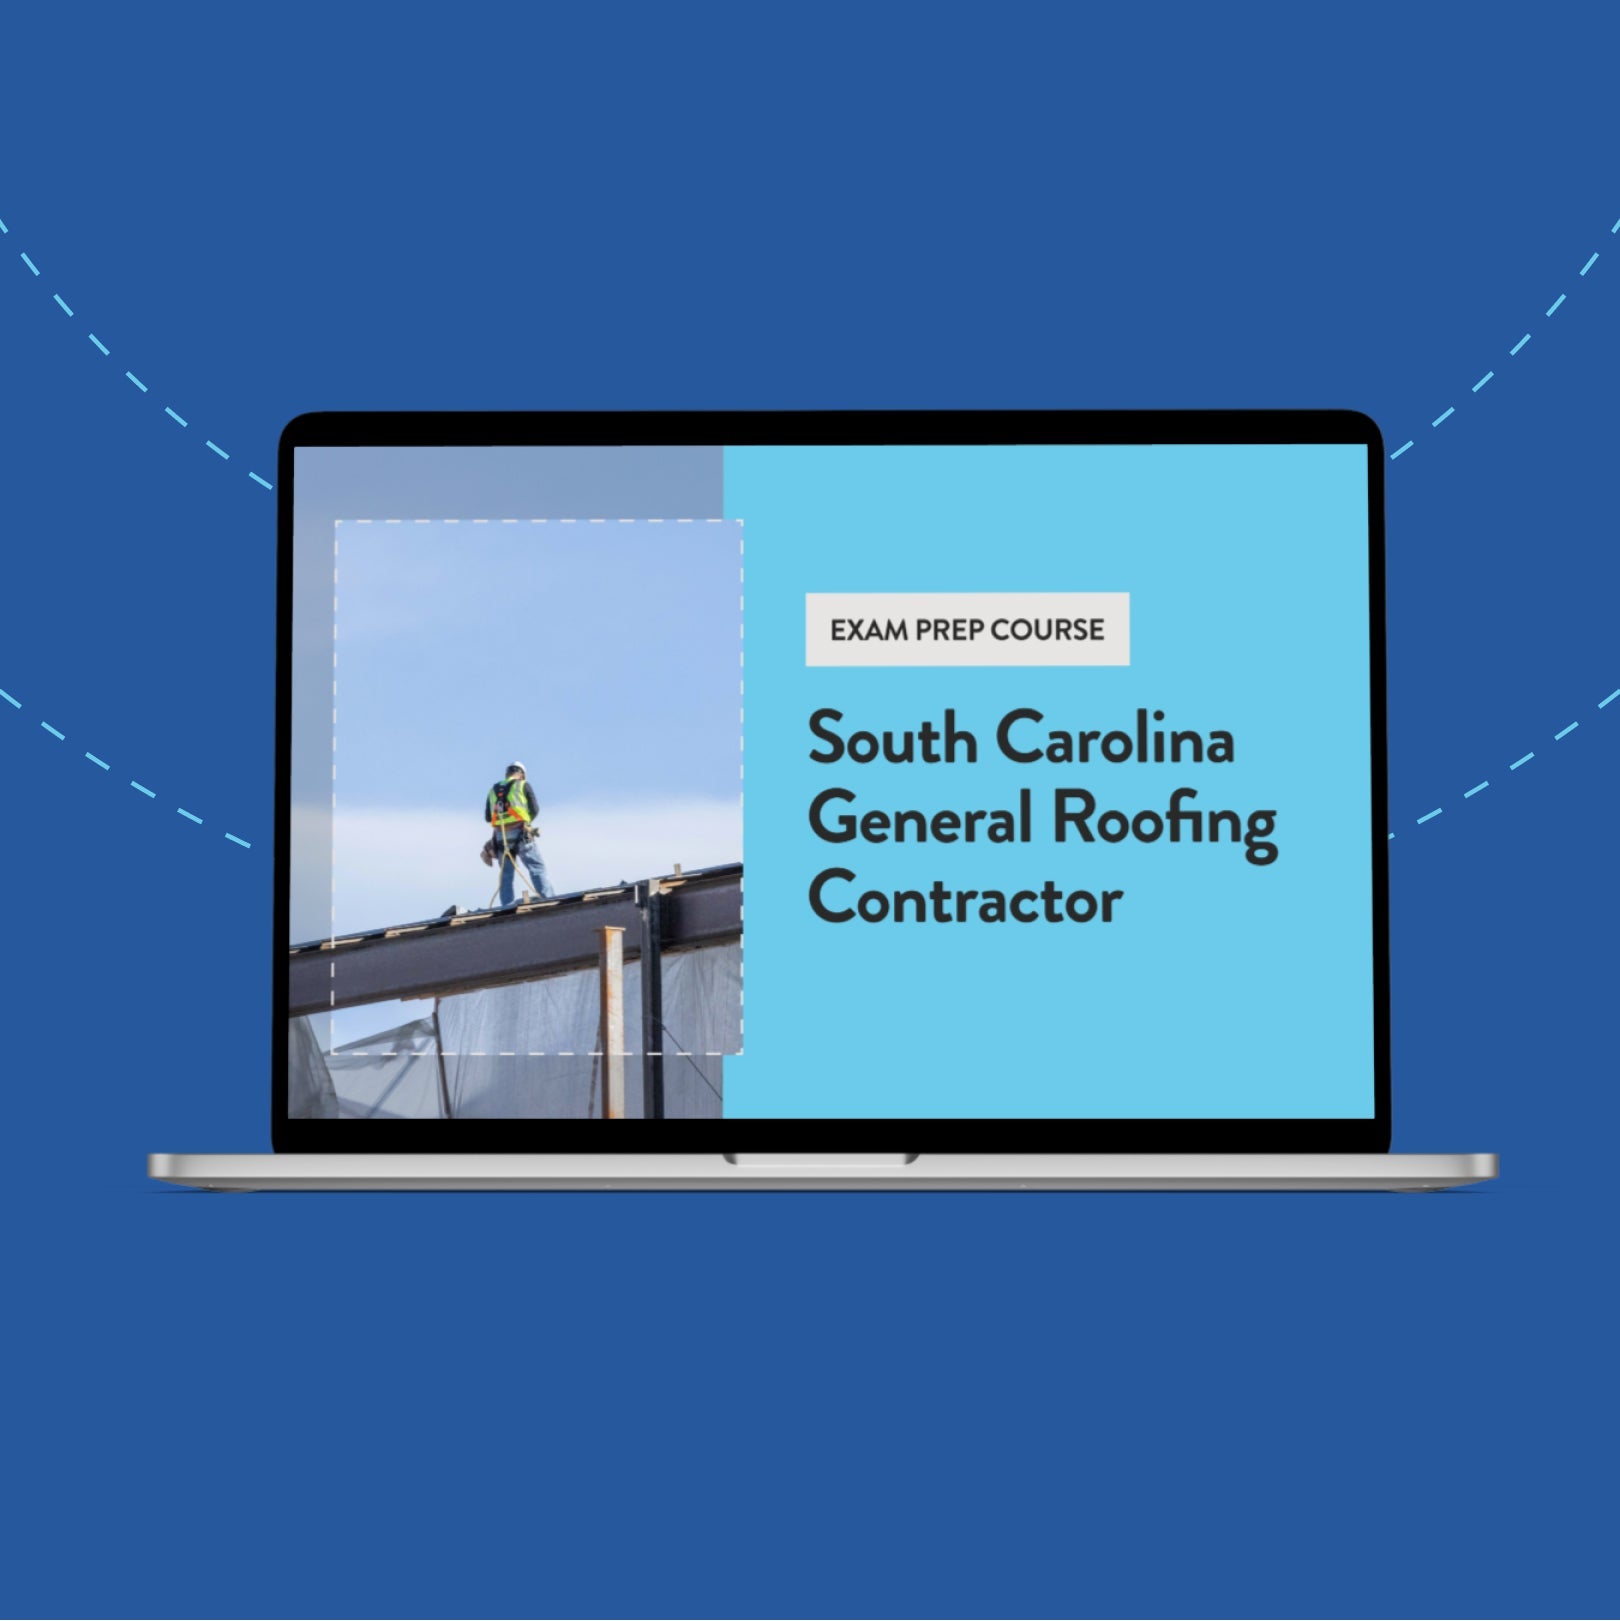 South Carolina General Roofing Contractor Exam Prep Course